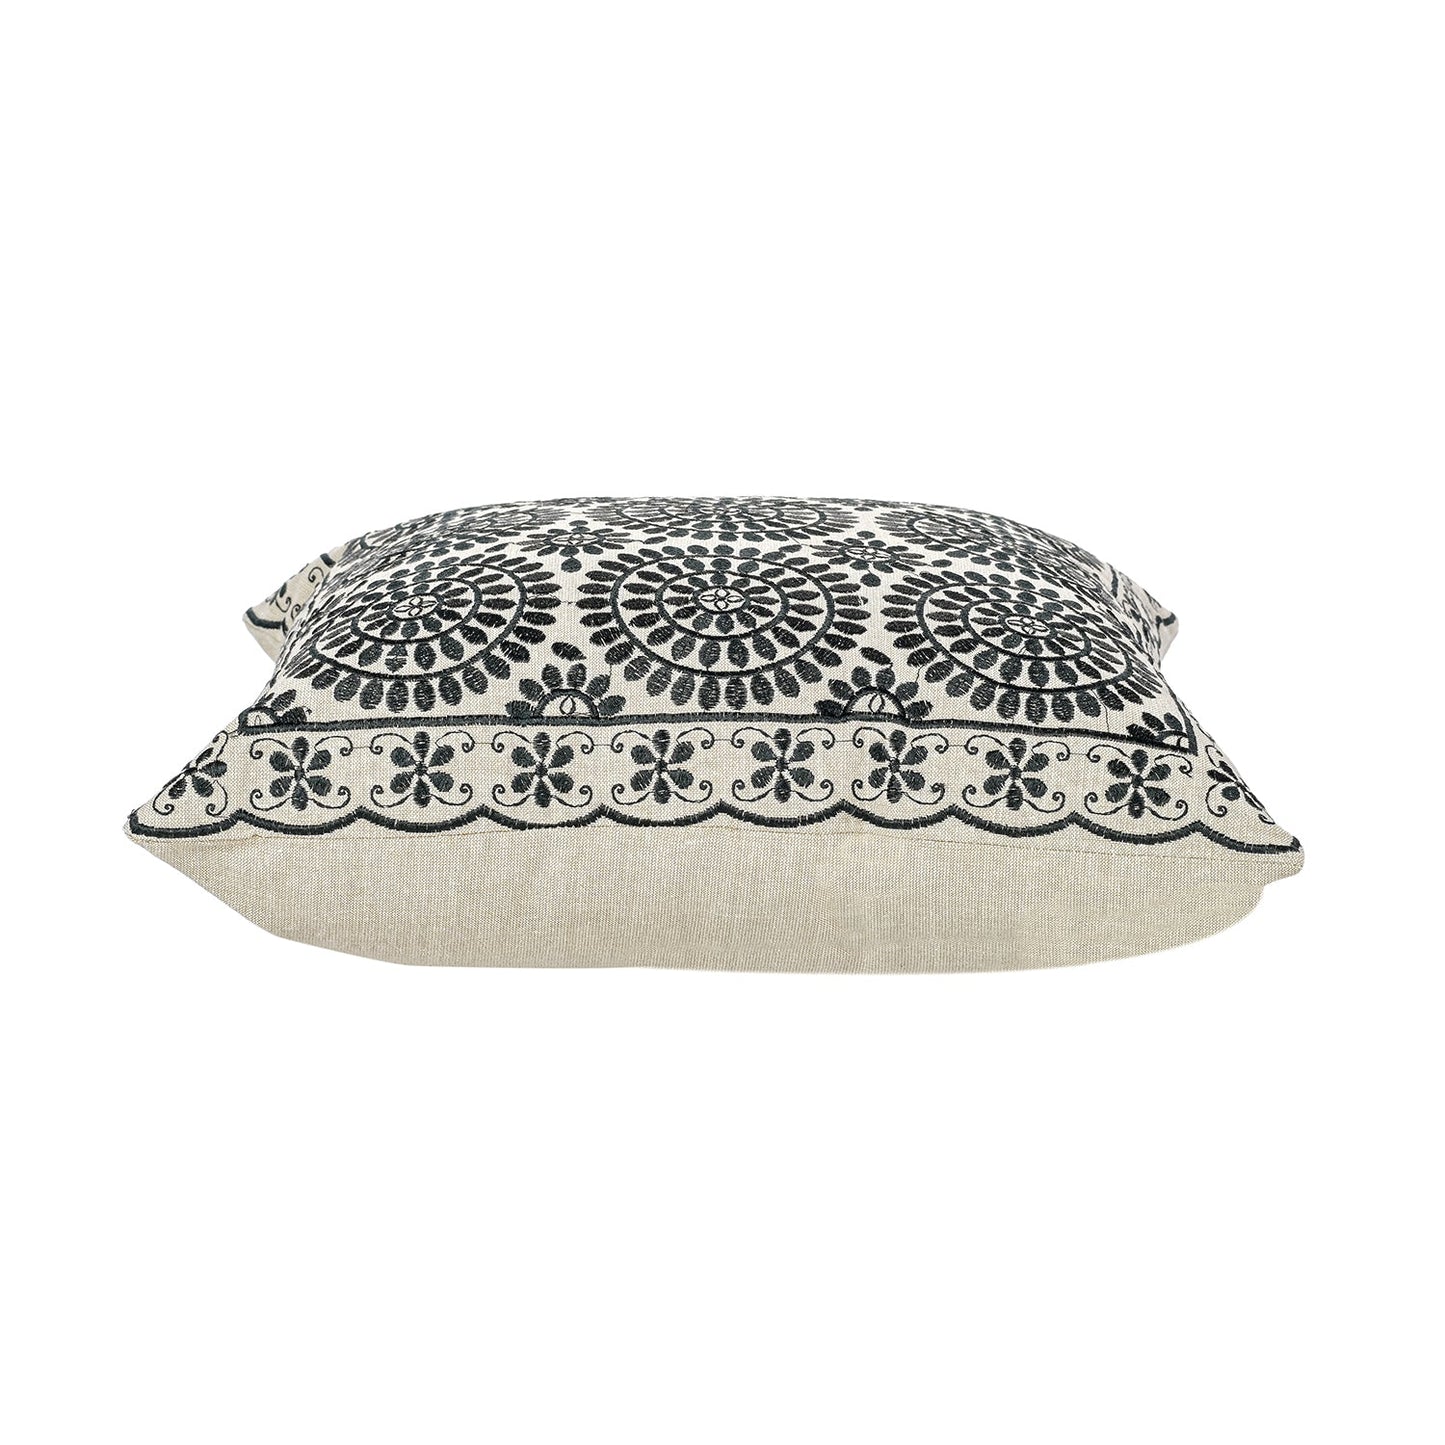 Black Geometric Jaipur Throw Pillow Cover - I